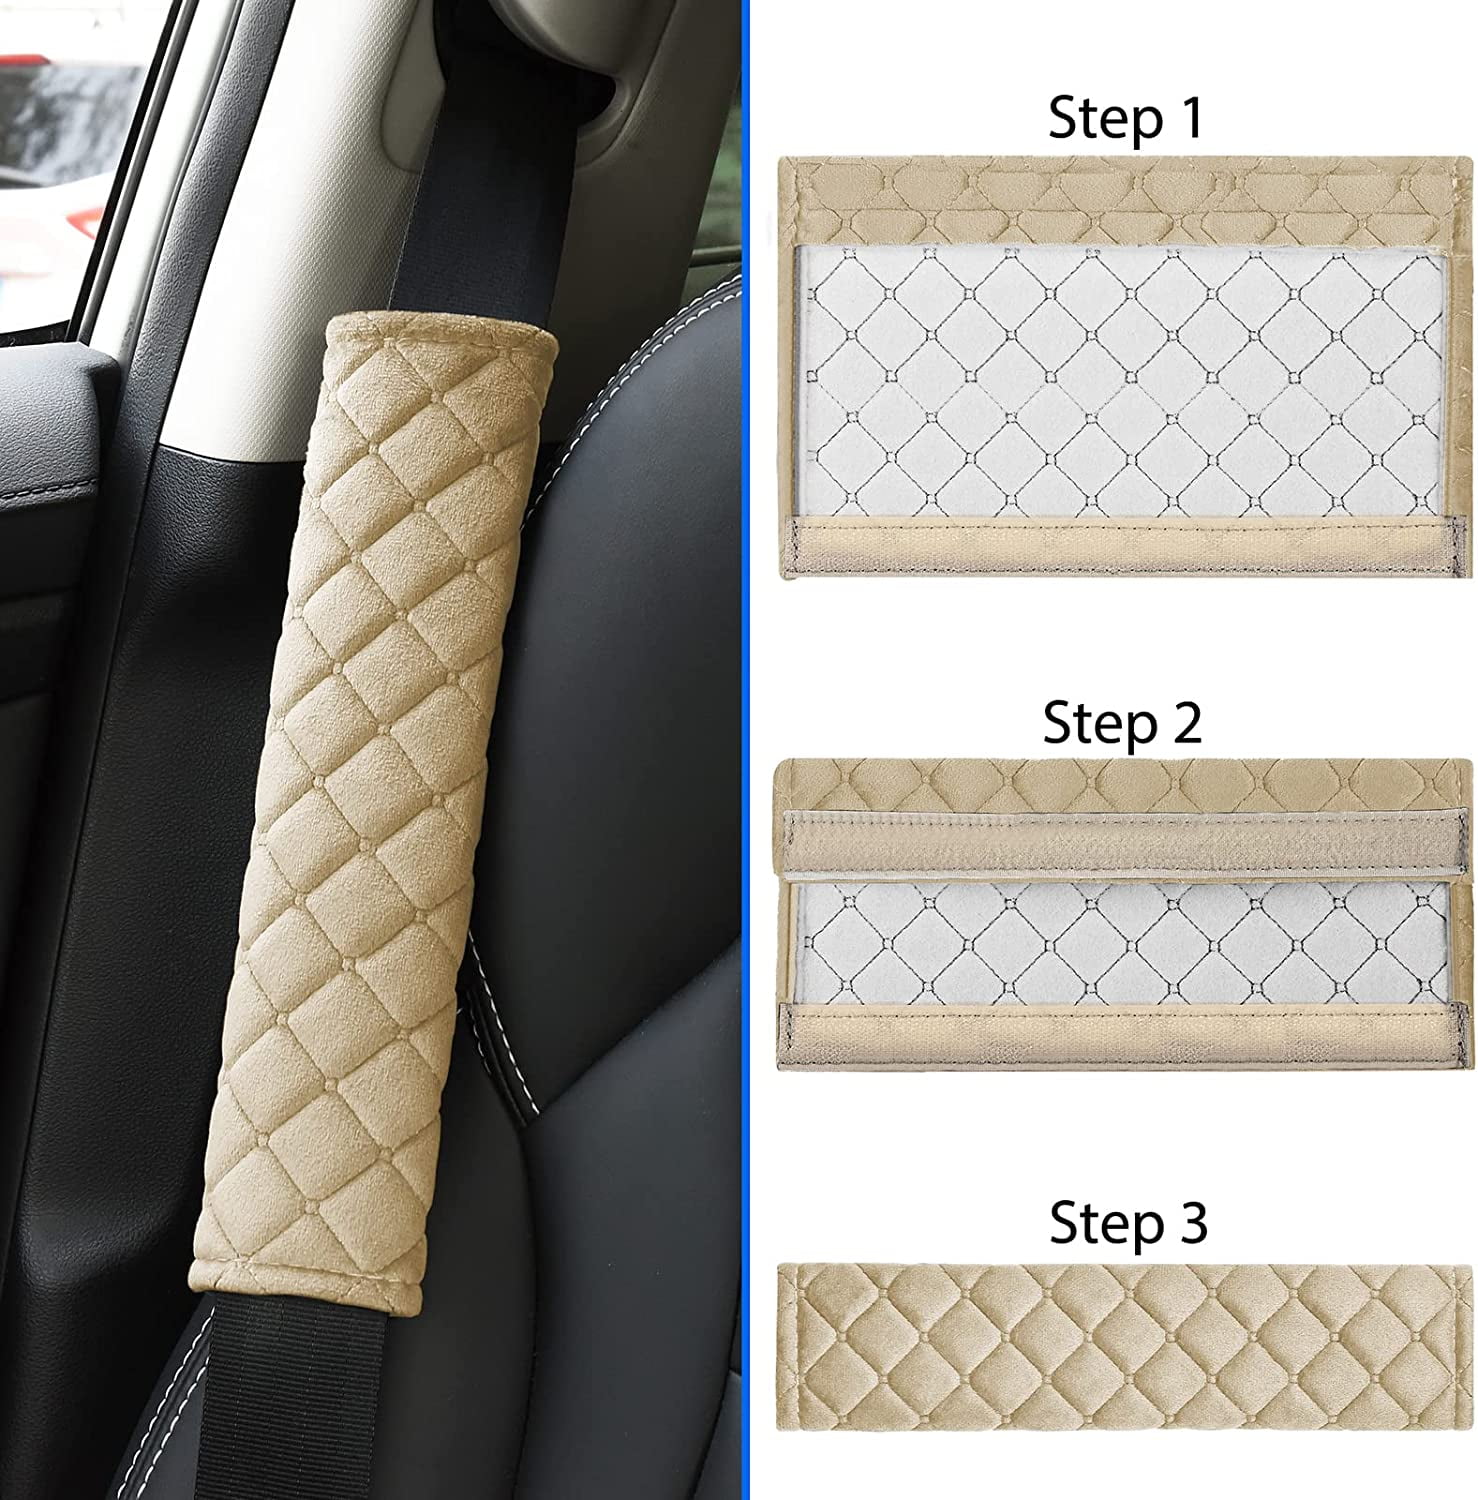 Casewin 1 Pair Car Seat Belt Pads Seatbelt Protector Soft Comfort